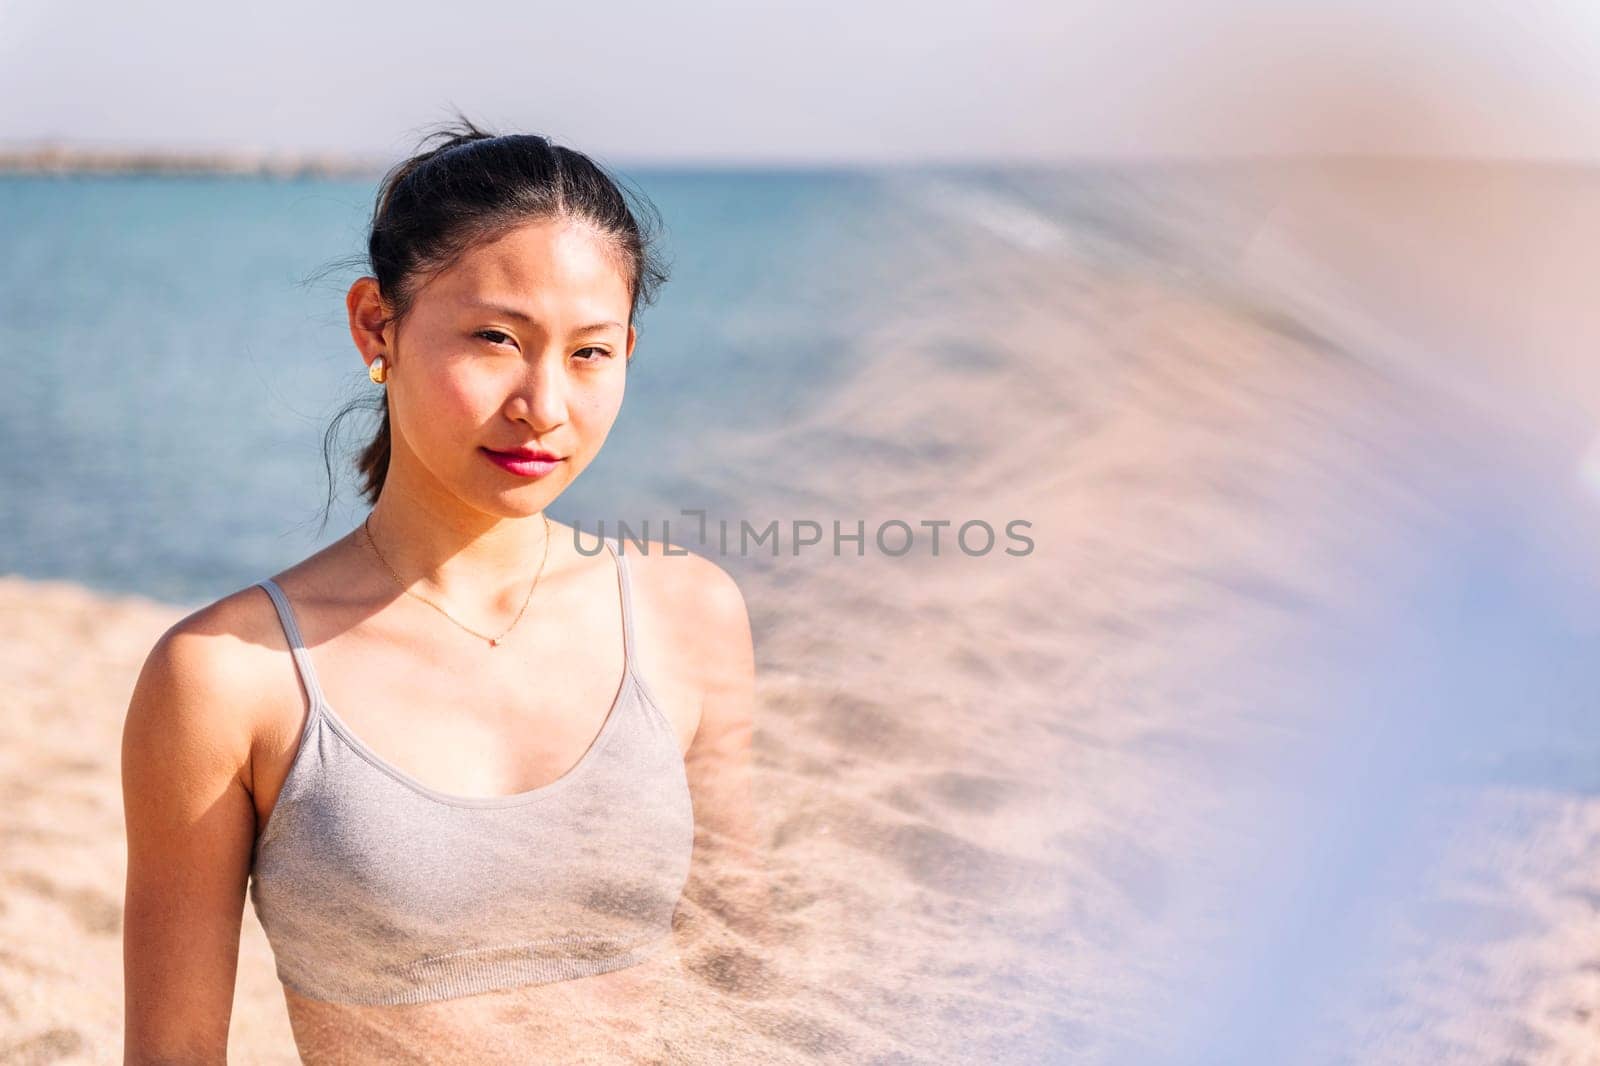 young contemplative asian female at beach by raulmelldo